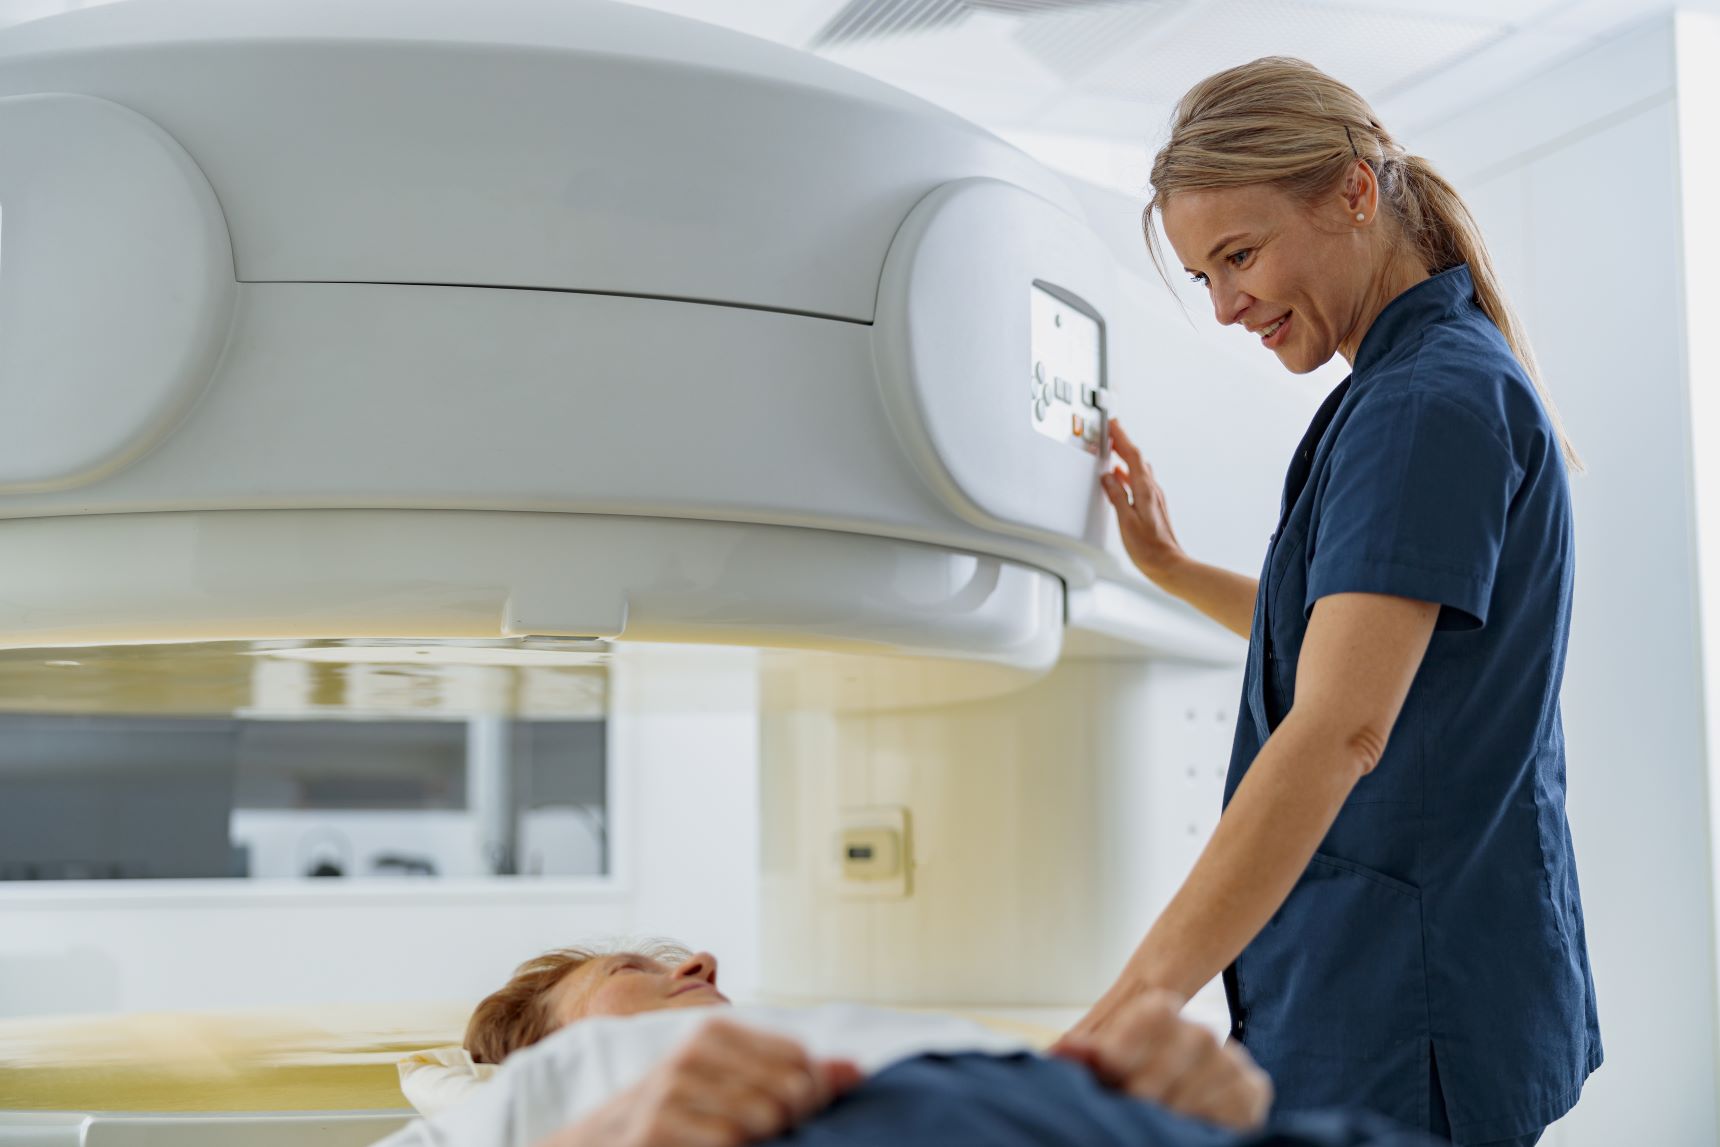 Is Radiology Tech School Harder than Nursing School?